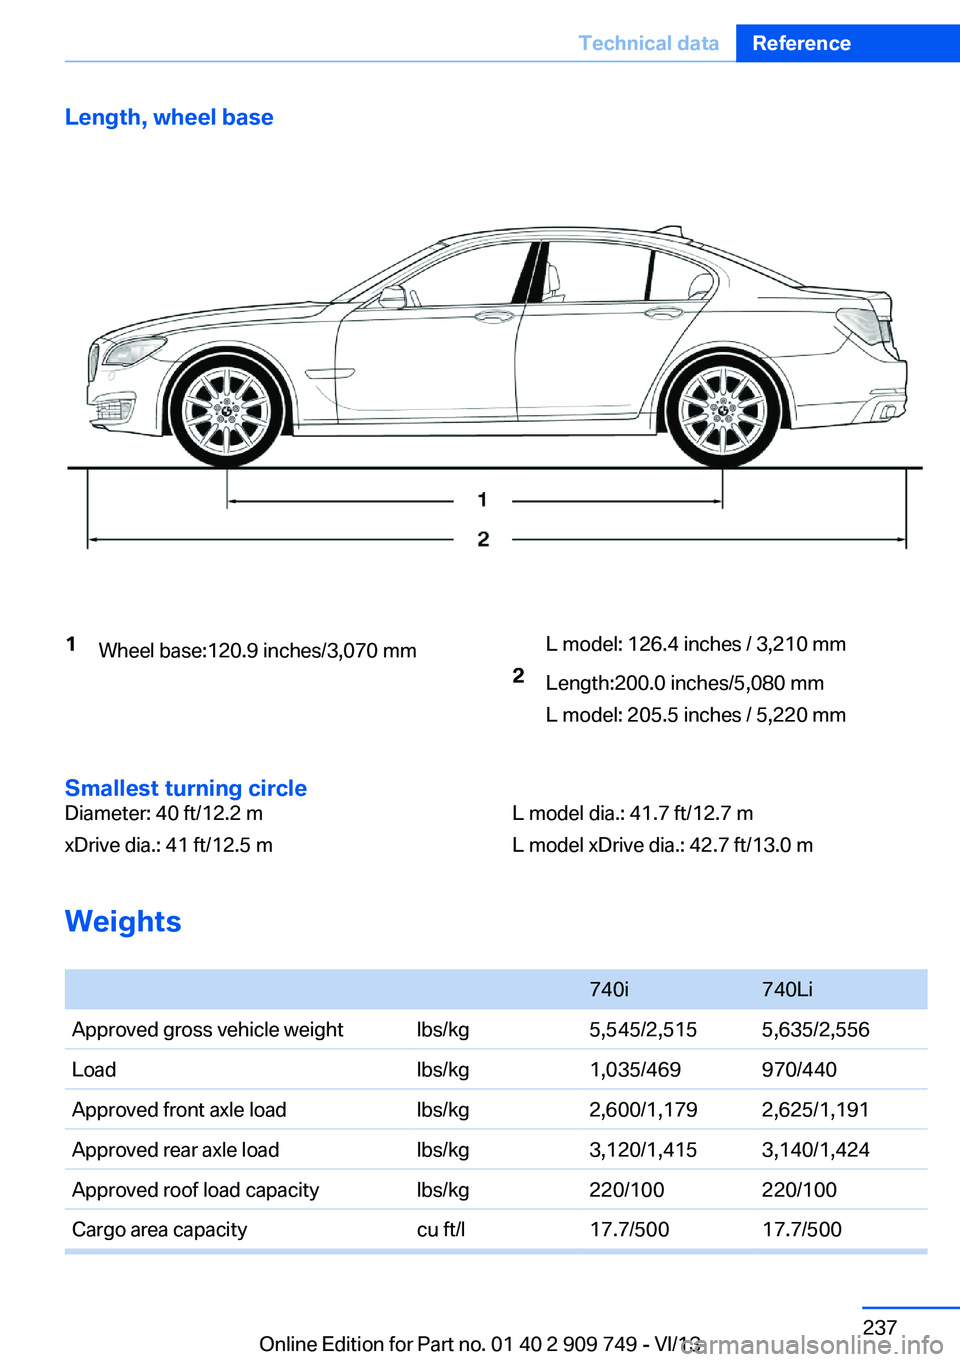 BMW 750I XDRIVE 2014  Owners Manual Length, wheel base1Wheel base:120.9 inches/3,070 mmL model: 126.4 inches / 3,210 mm2Length:200.0 inches/5,080 mm
L model: 205.5 inches / 5,220 mmSmallest turning circle
Diameter: 40 ft/12.2 m
xDrive d